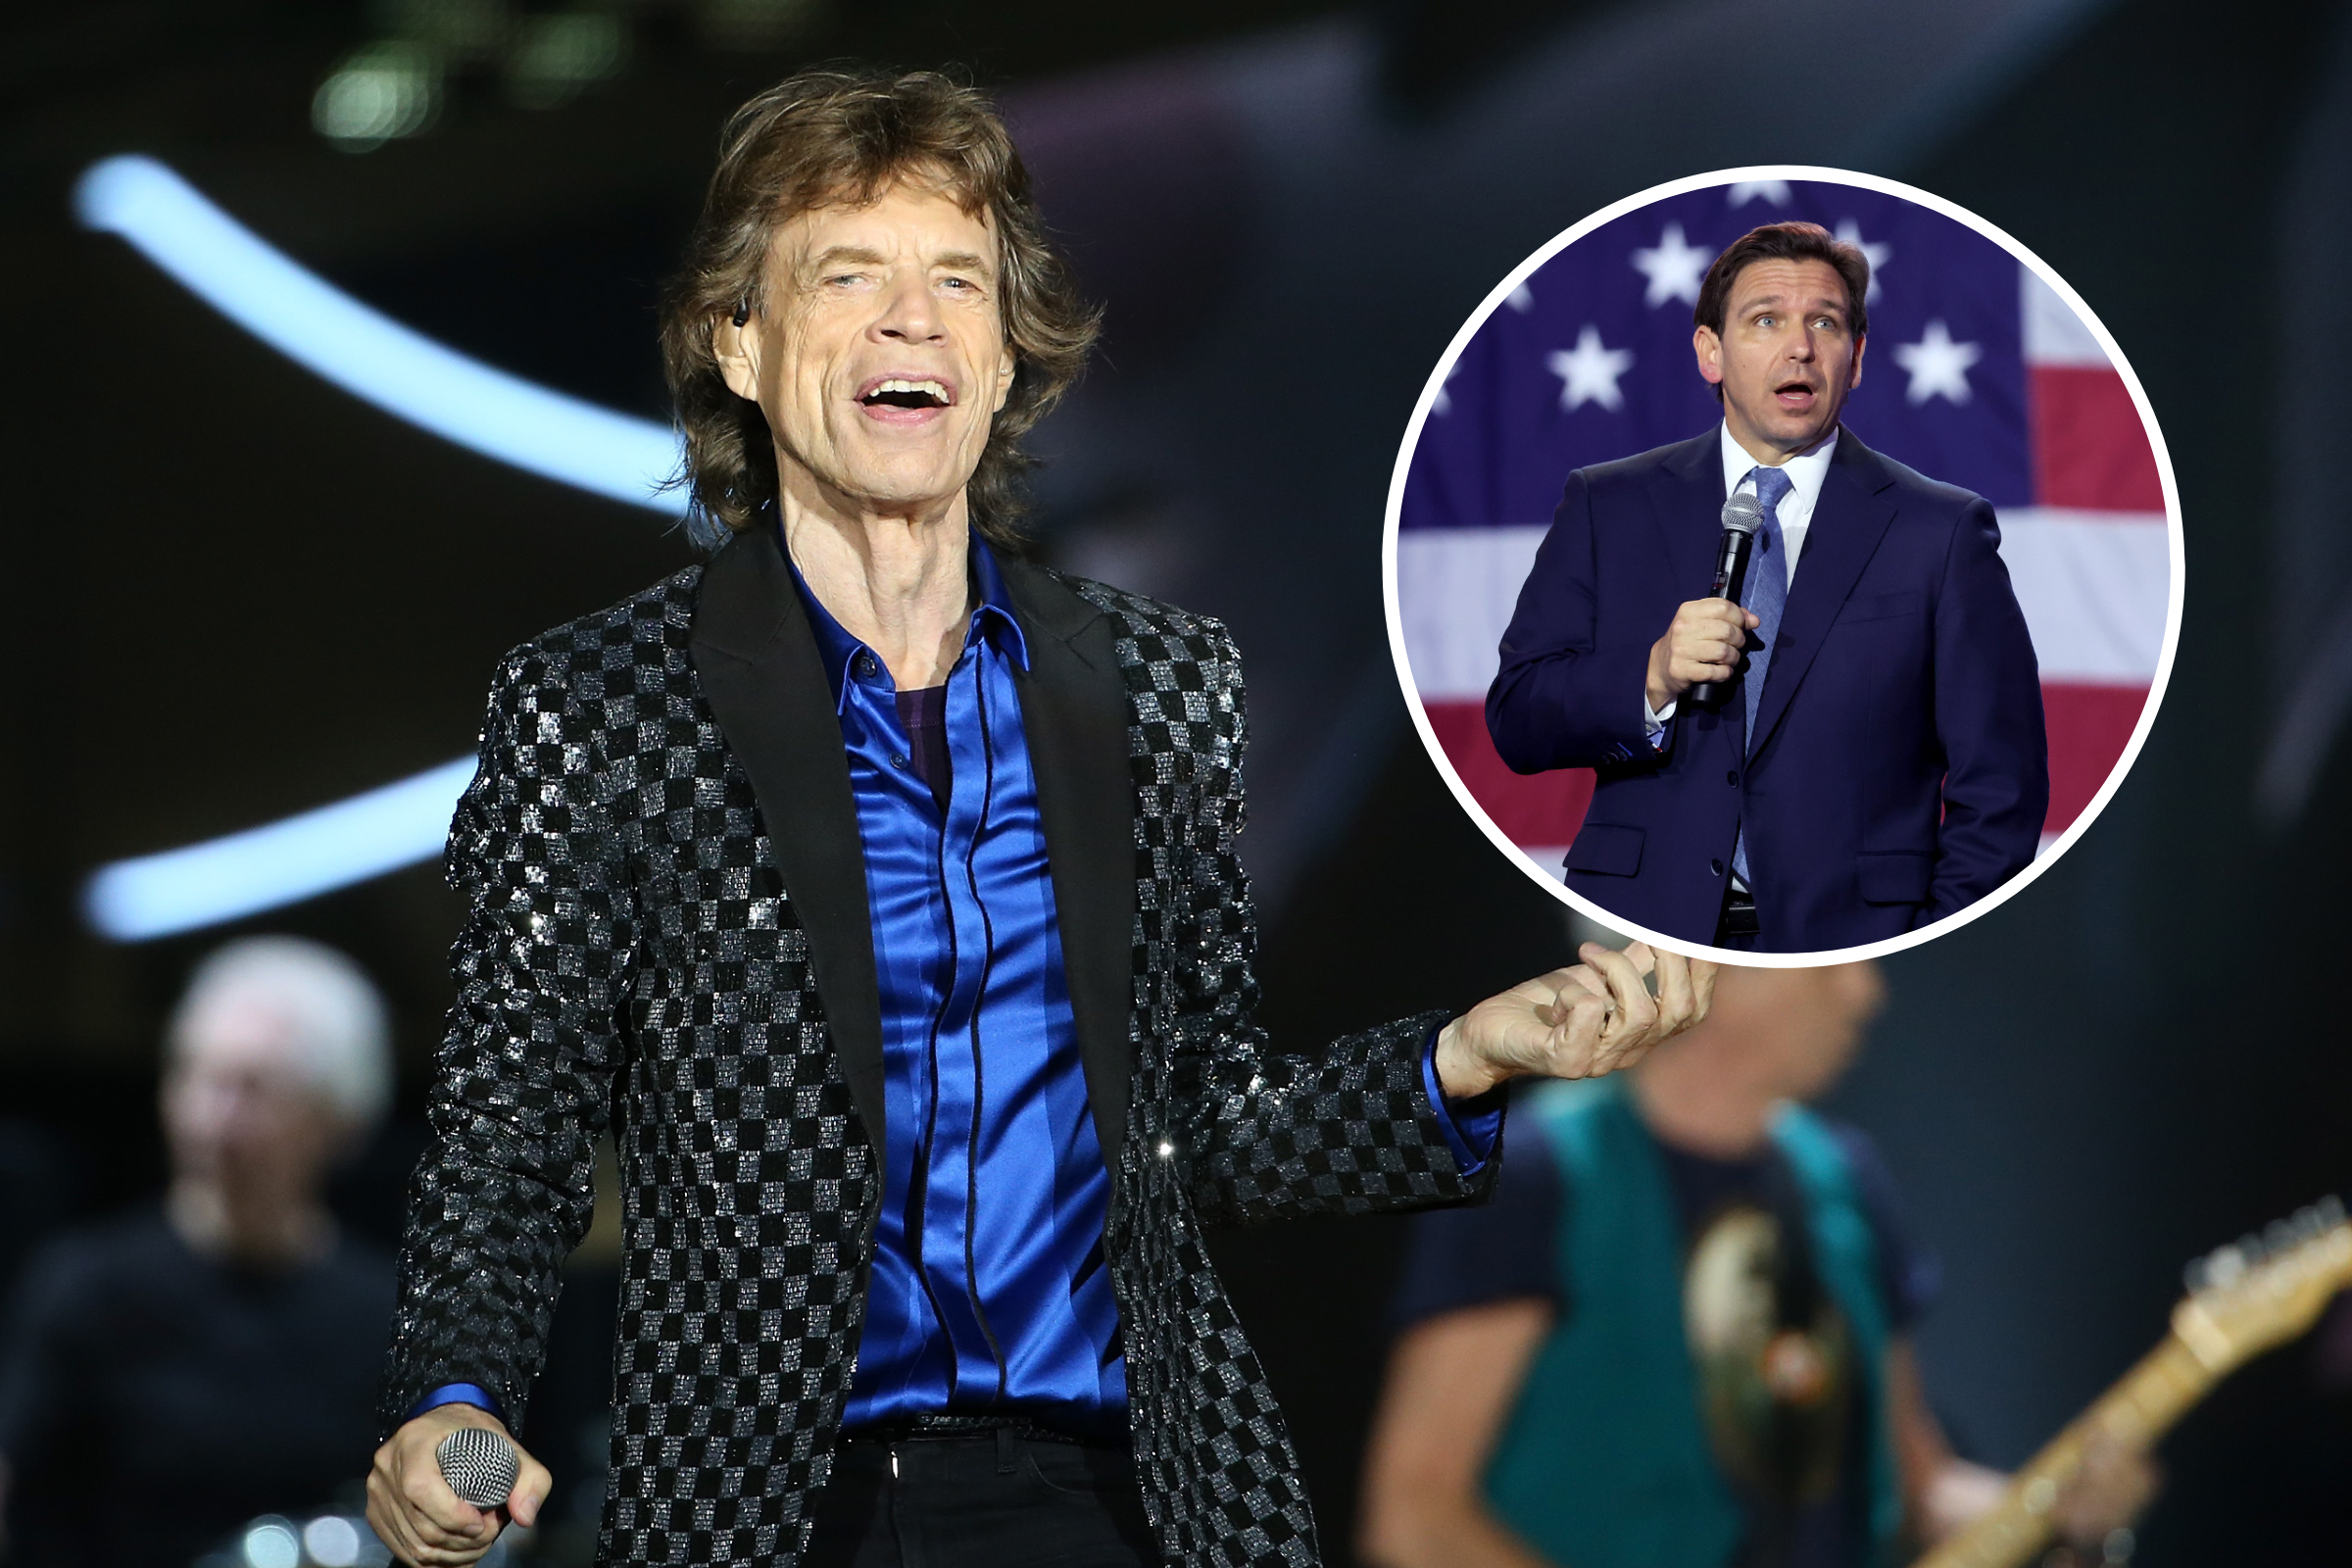 Mick Jagger mocks Ron DeSantis during Florida concert